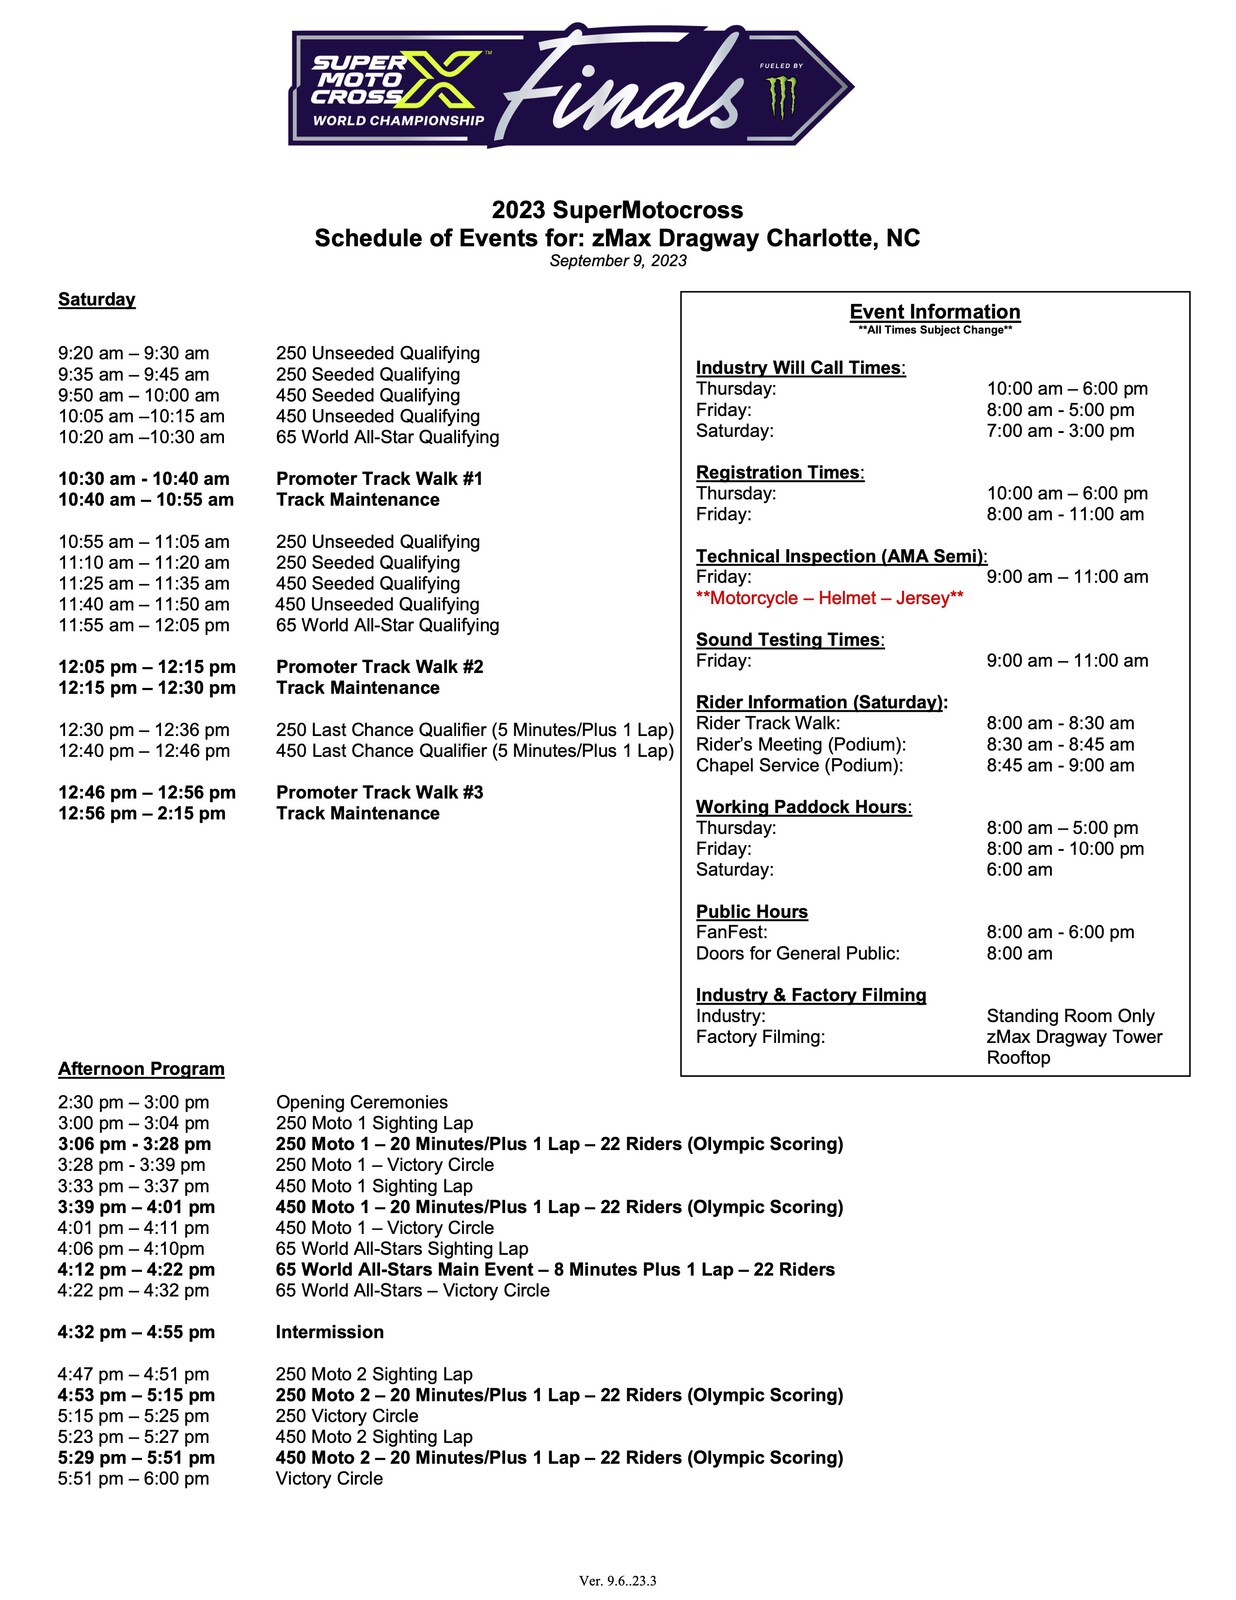 SMX Playoff Round 1 in North Carolina race day schedule.